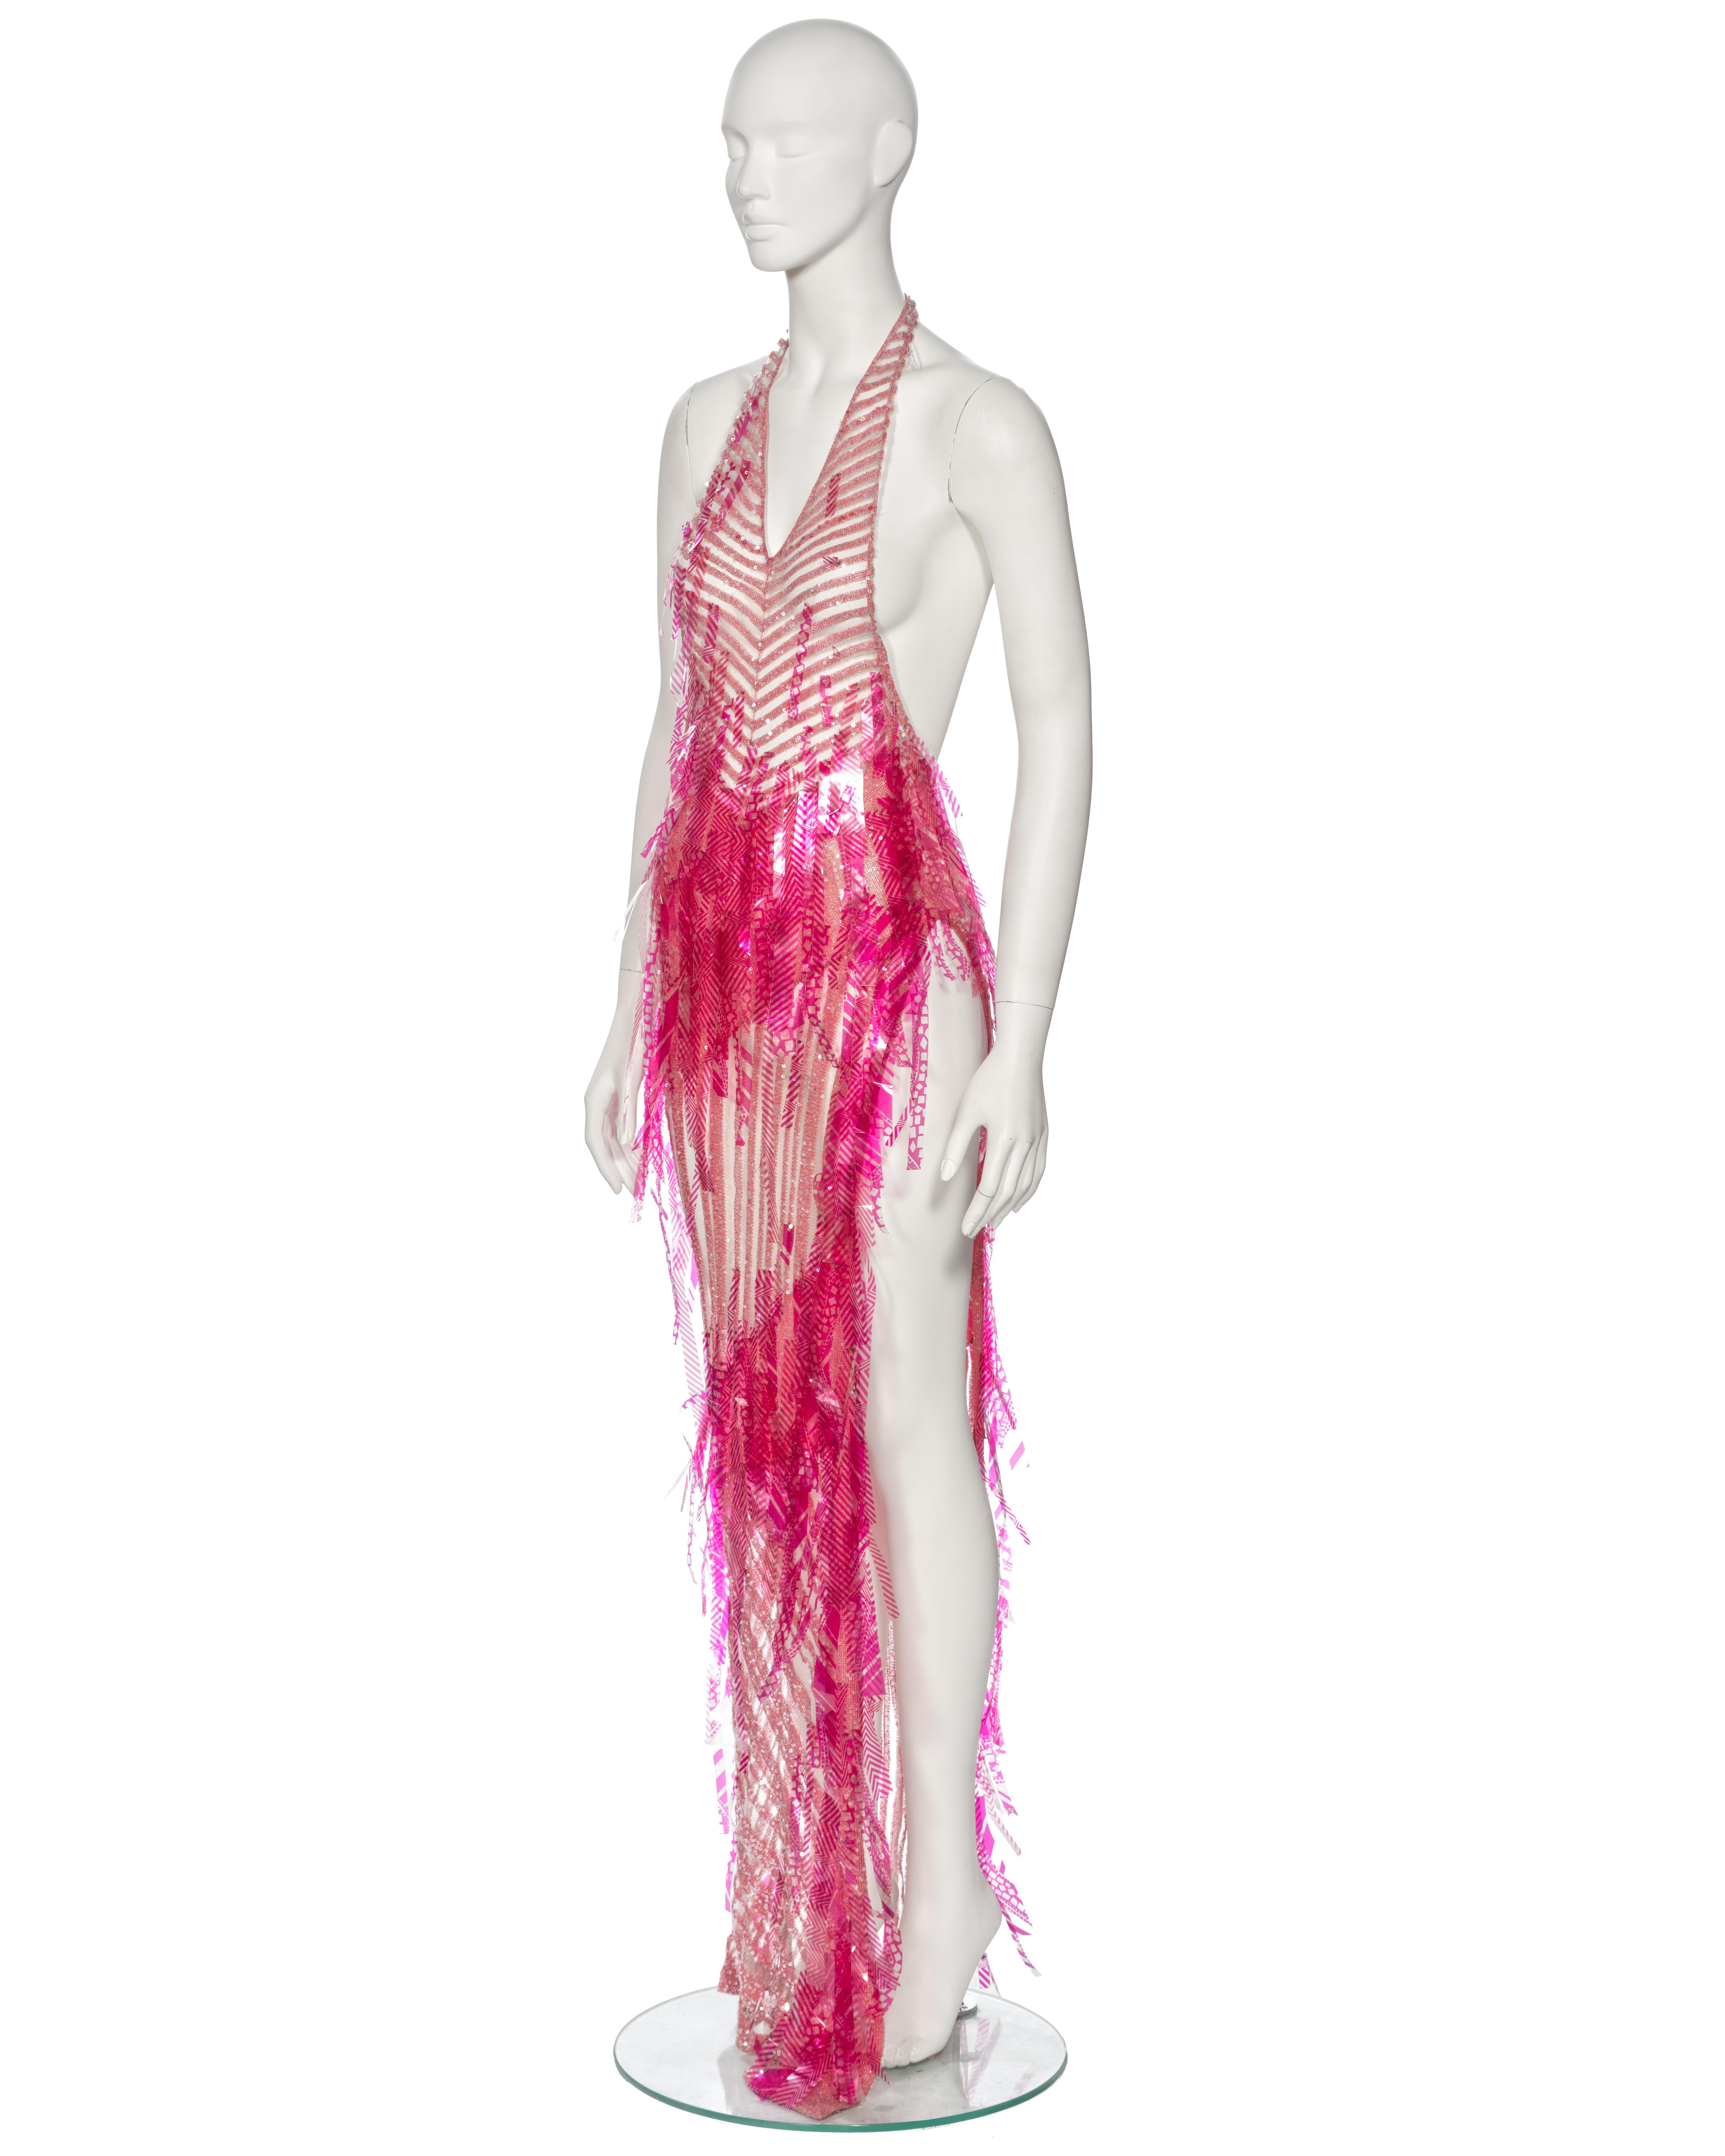 Women's Julien MacDonald Pink Striped Knit Embellished Evening Dress, ss 2002 For Sale